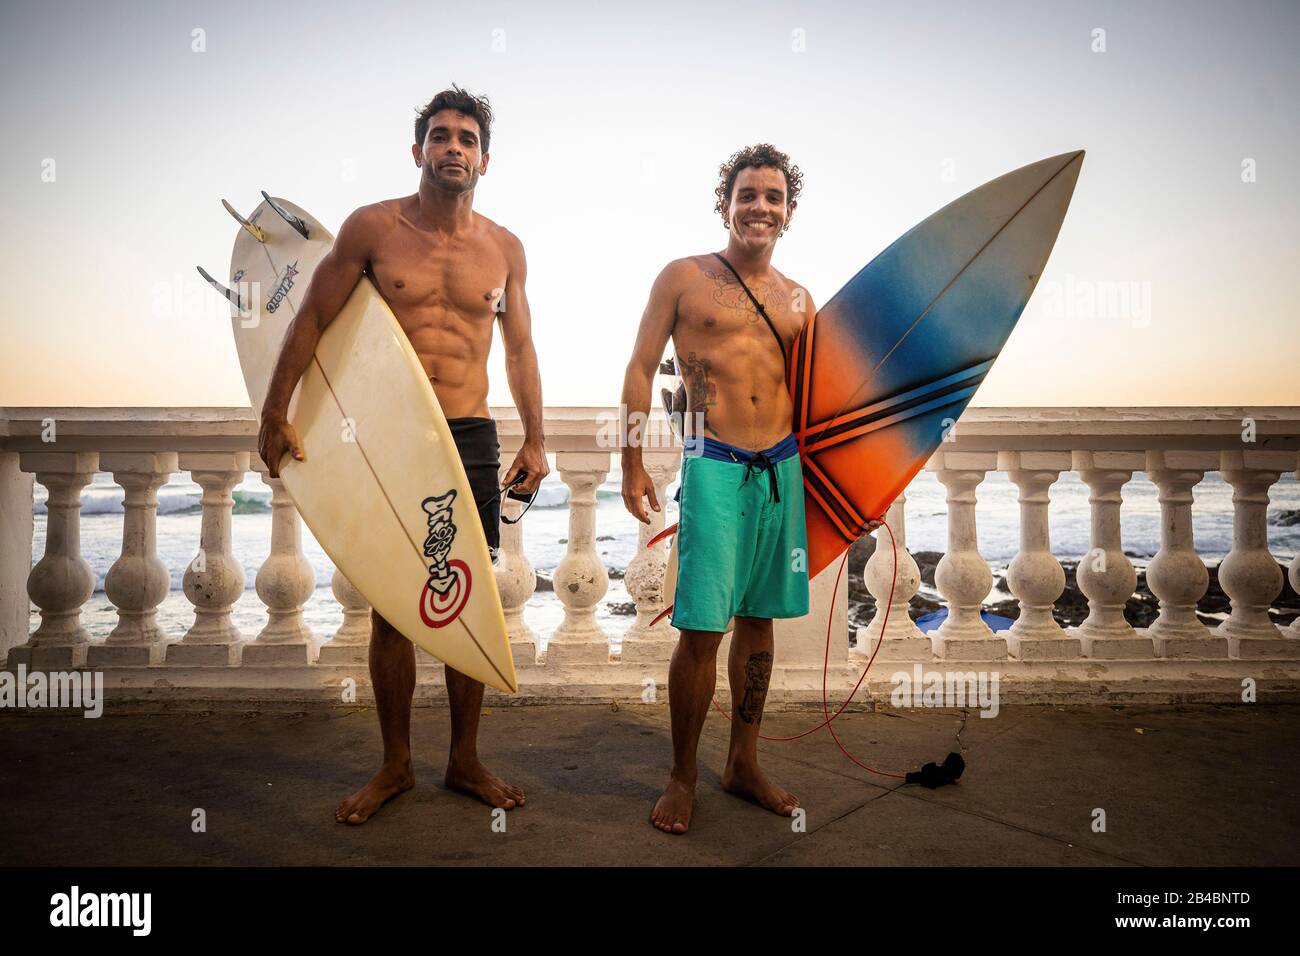 Brasilien, Bundesstaat Bahia, Salvador de Bahia, am Meer am Ende des Tages posieren zwei Surfer Stockfoto